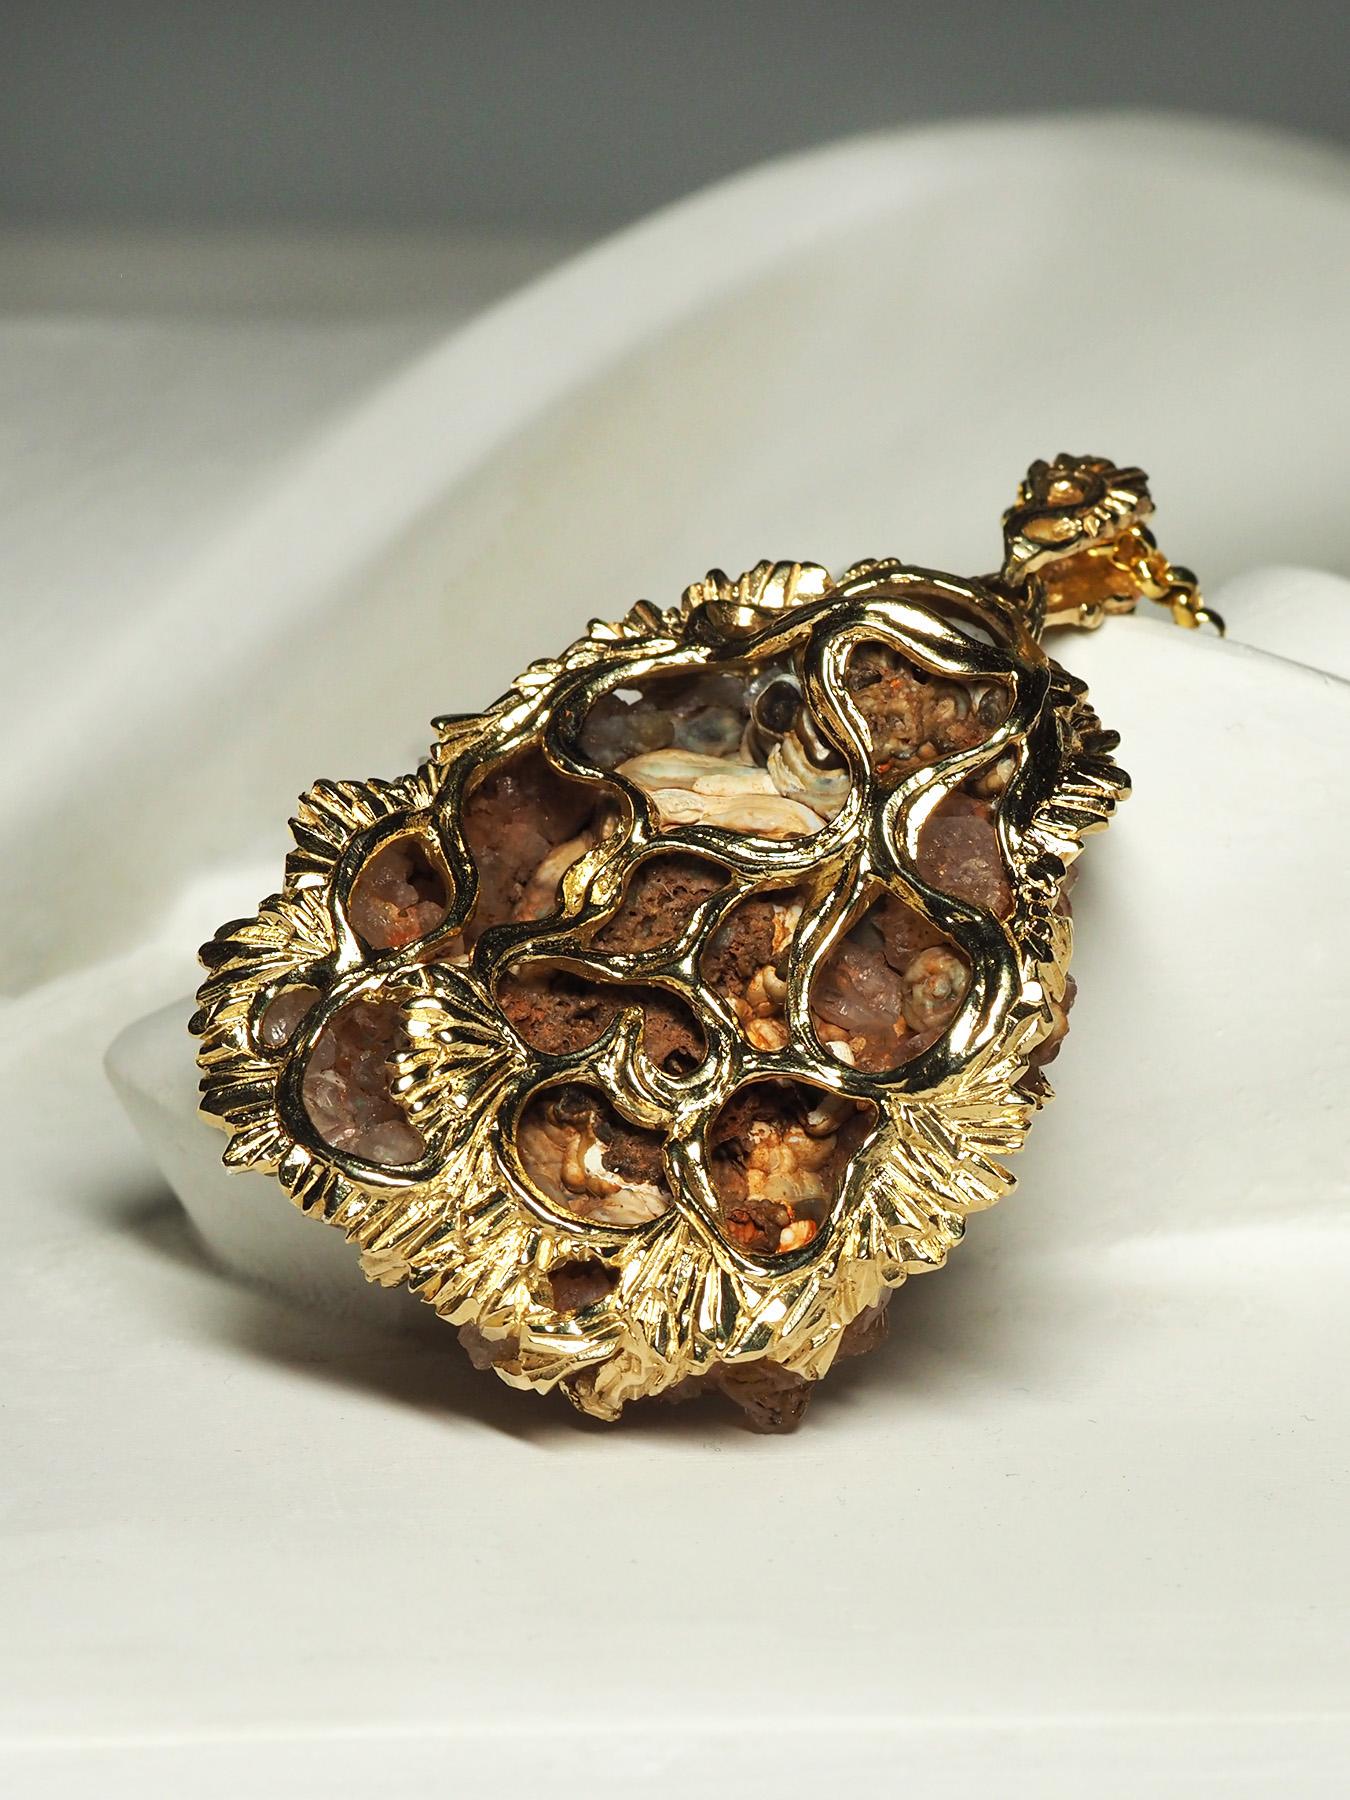 Uncut Agate Rose Gold Necklace Fantacy Art Nouveau Style Large Brown Natural Crystal For Sale